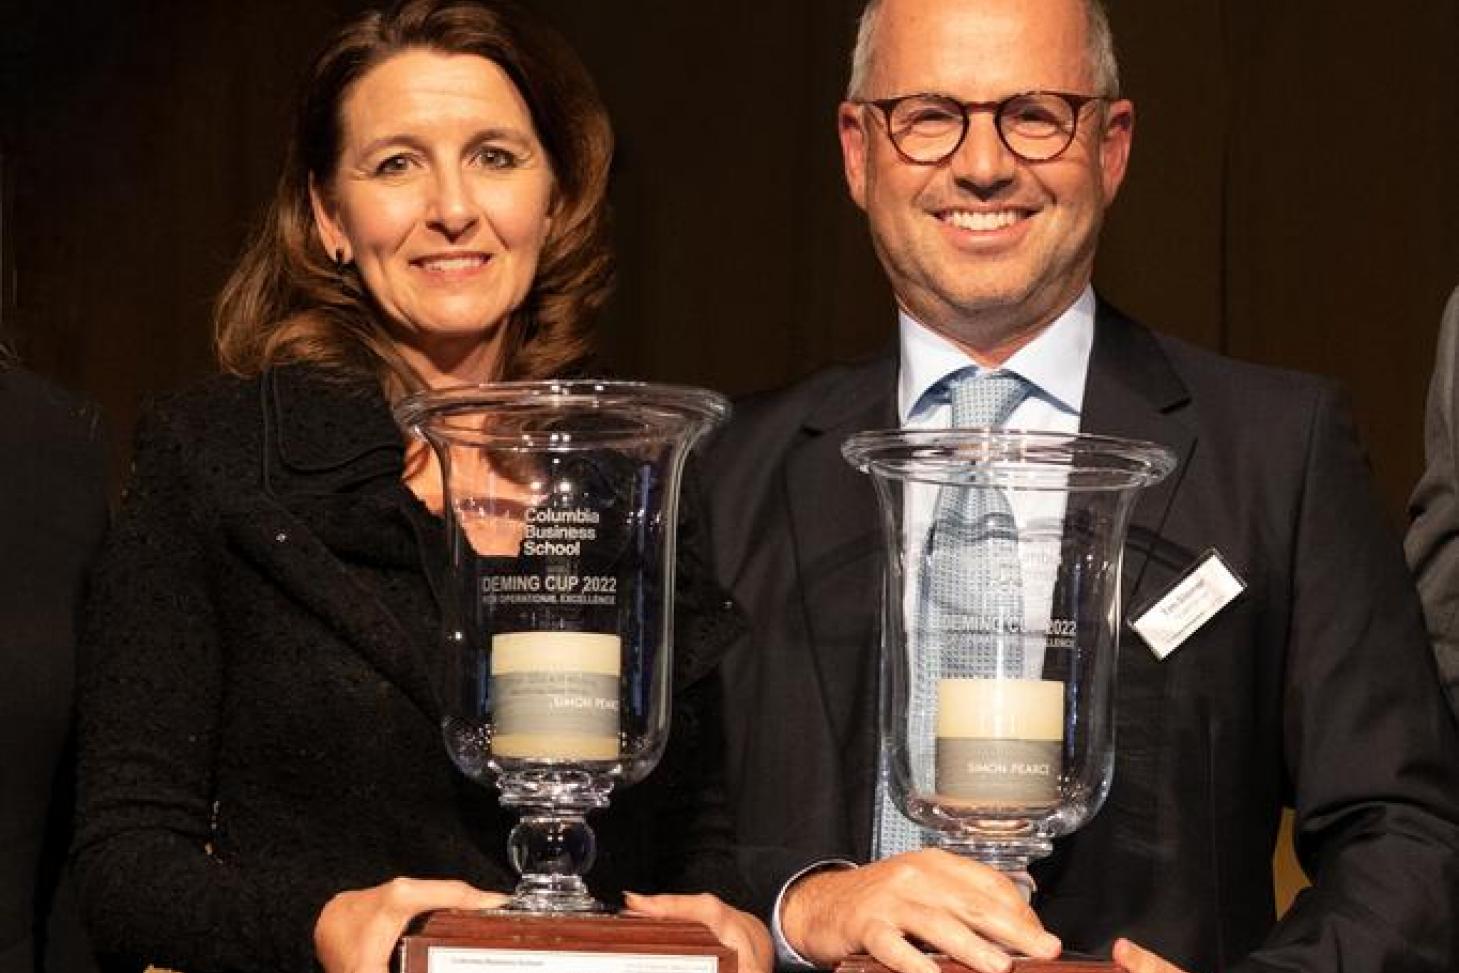 Tim Steiner, Kathy Warden Awarded 2022 Deming Cup